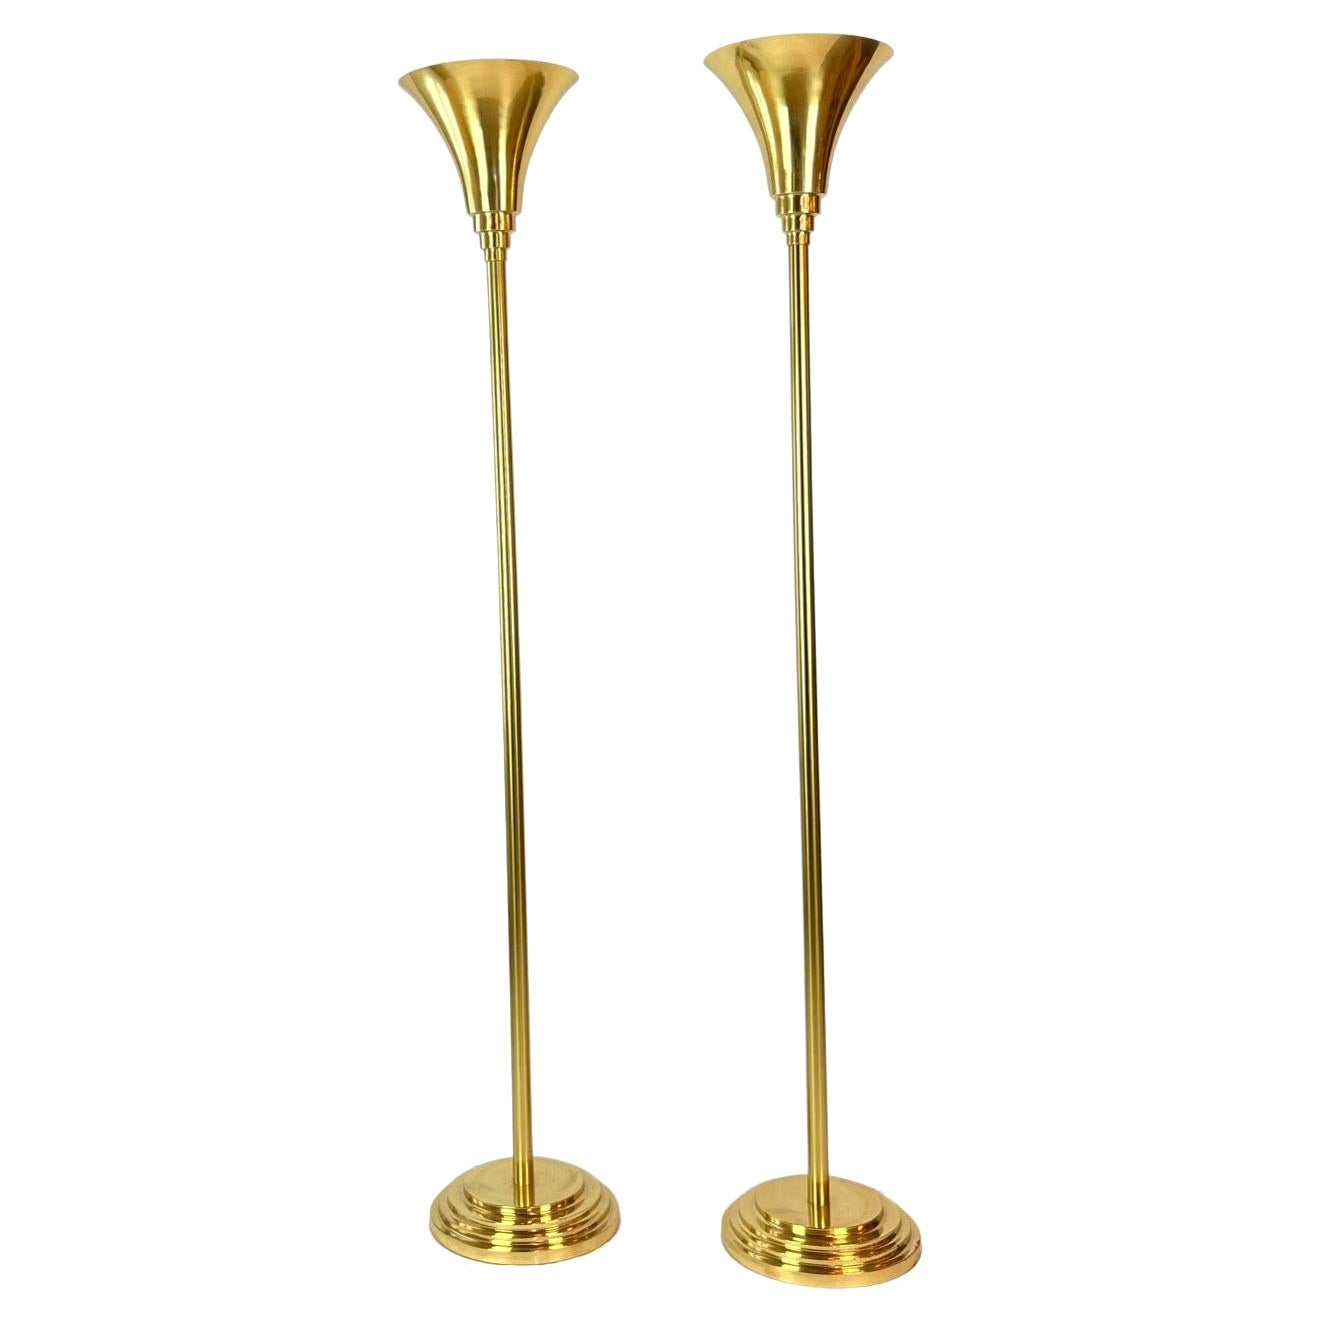 Pair of Brass Up Art Deco Uplighter Floor Lamps, France 1940s